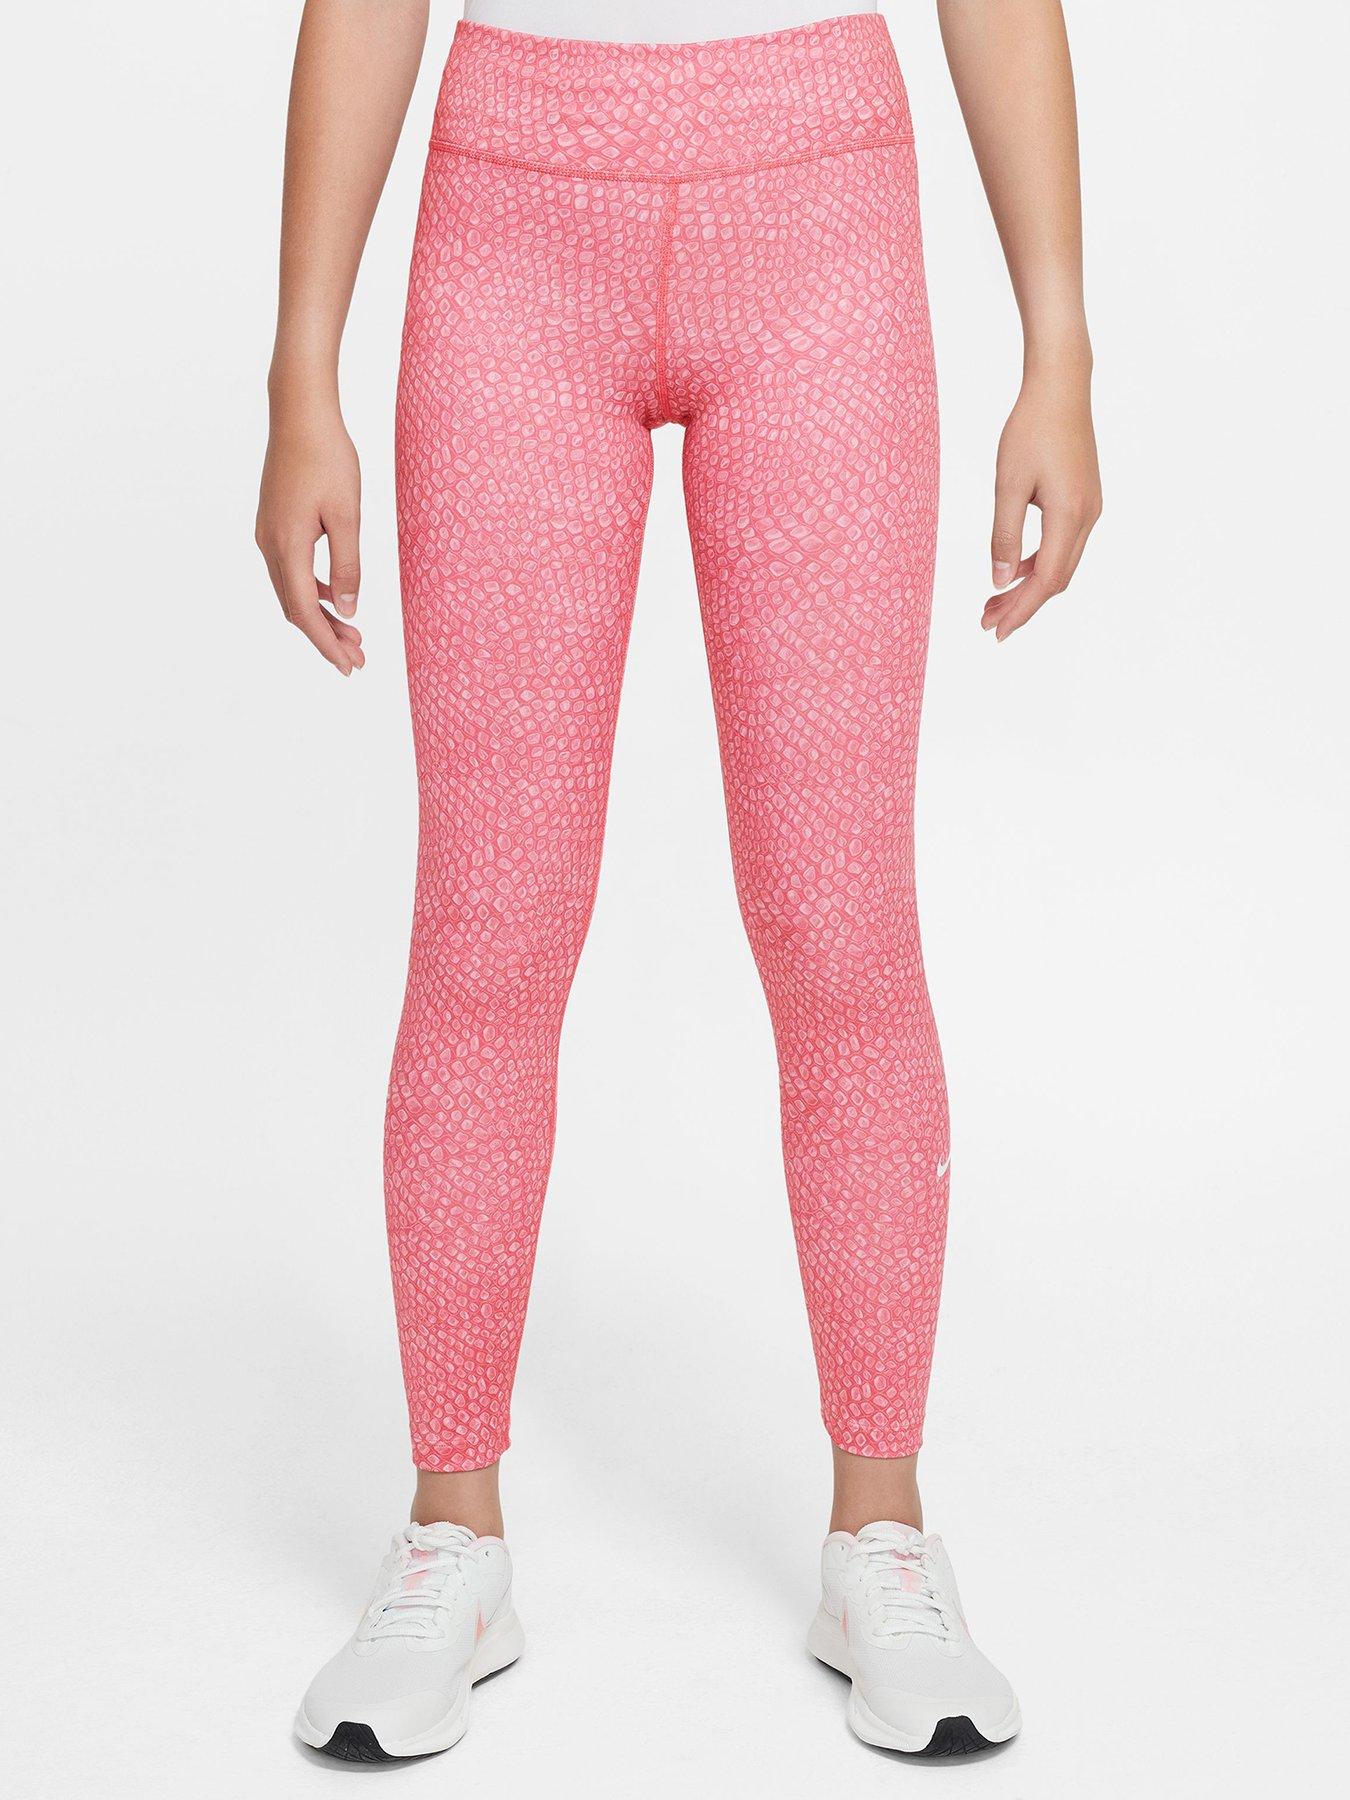 Gymshark Pink Legacy Leggings - $35 - From elle